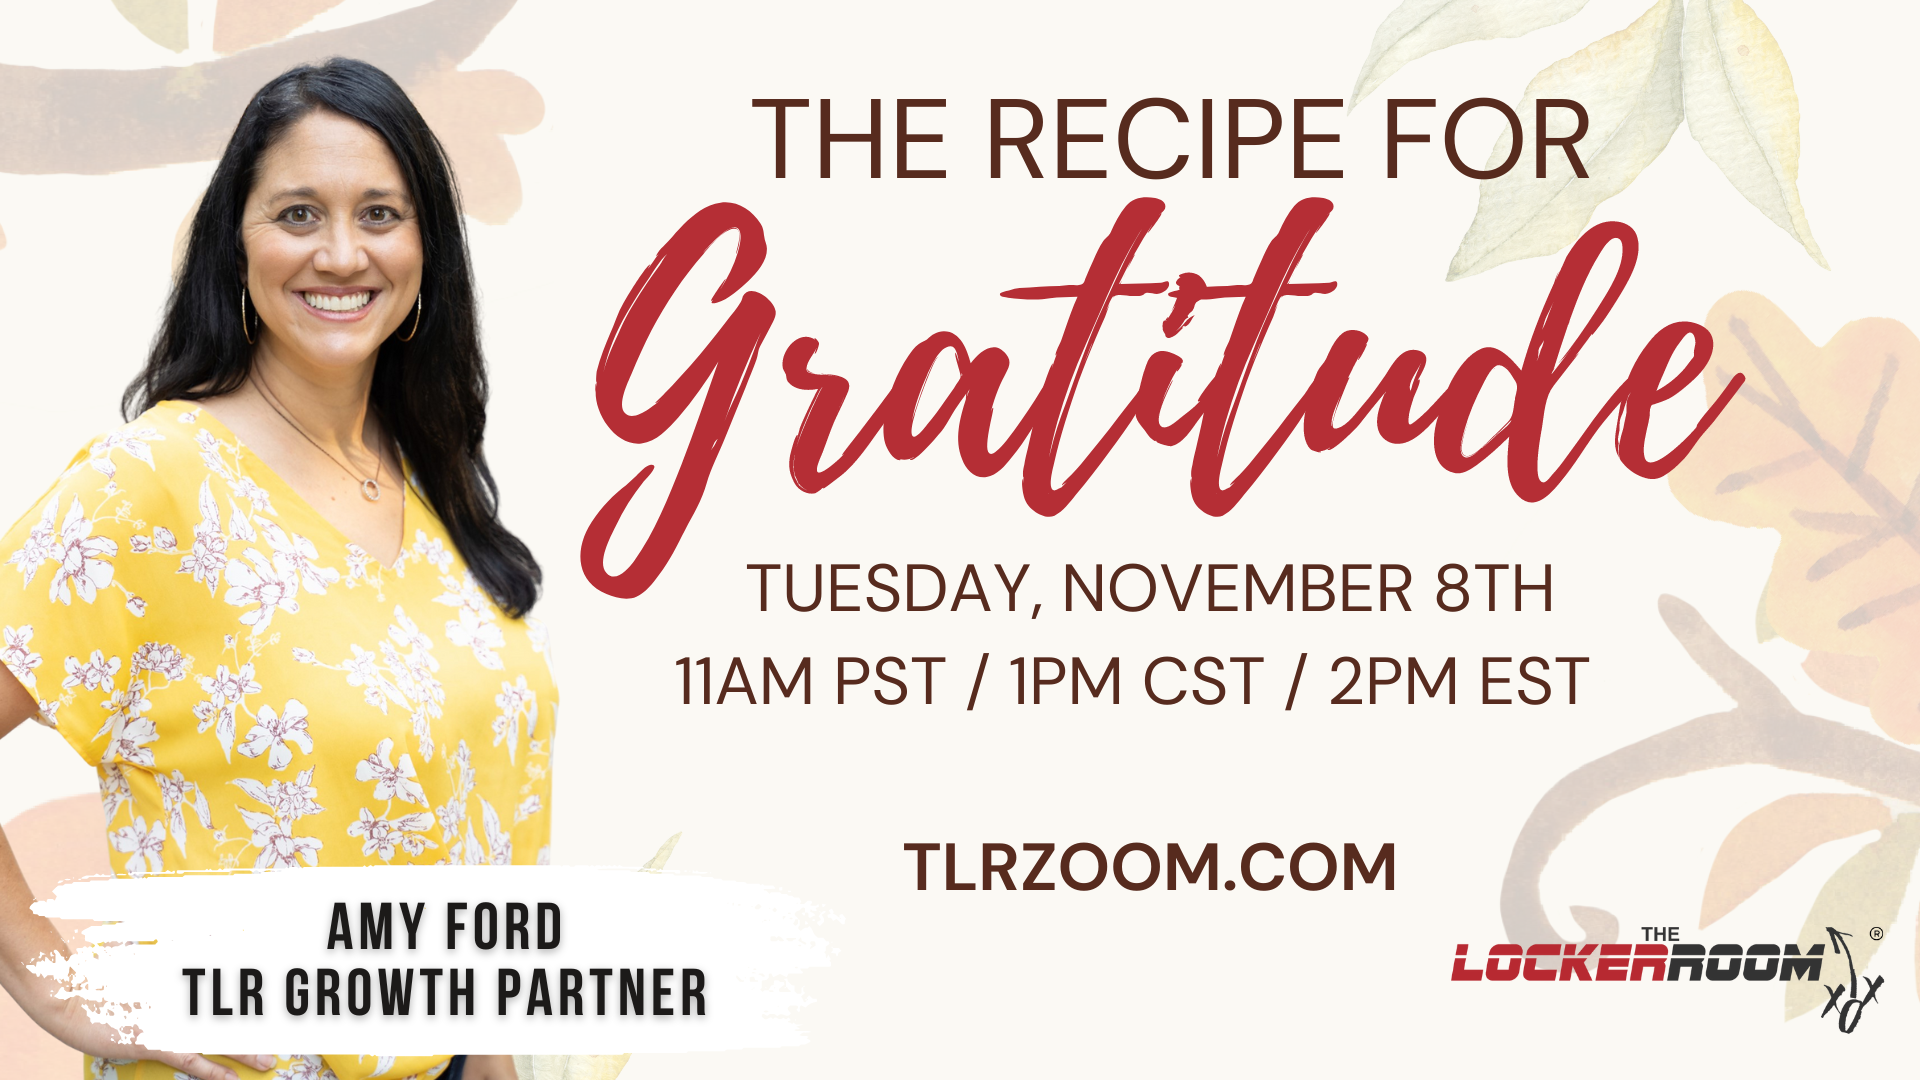 
TLR: The recipe for gratitude